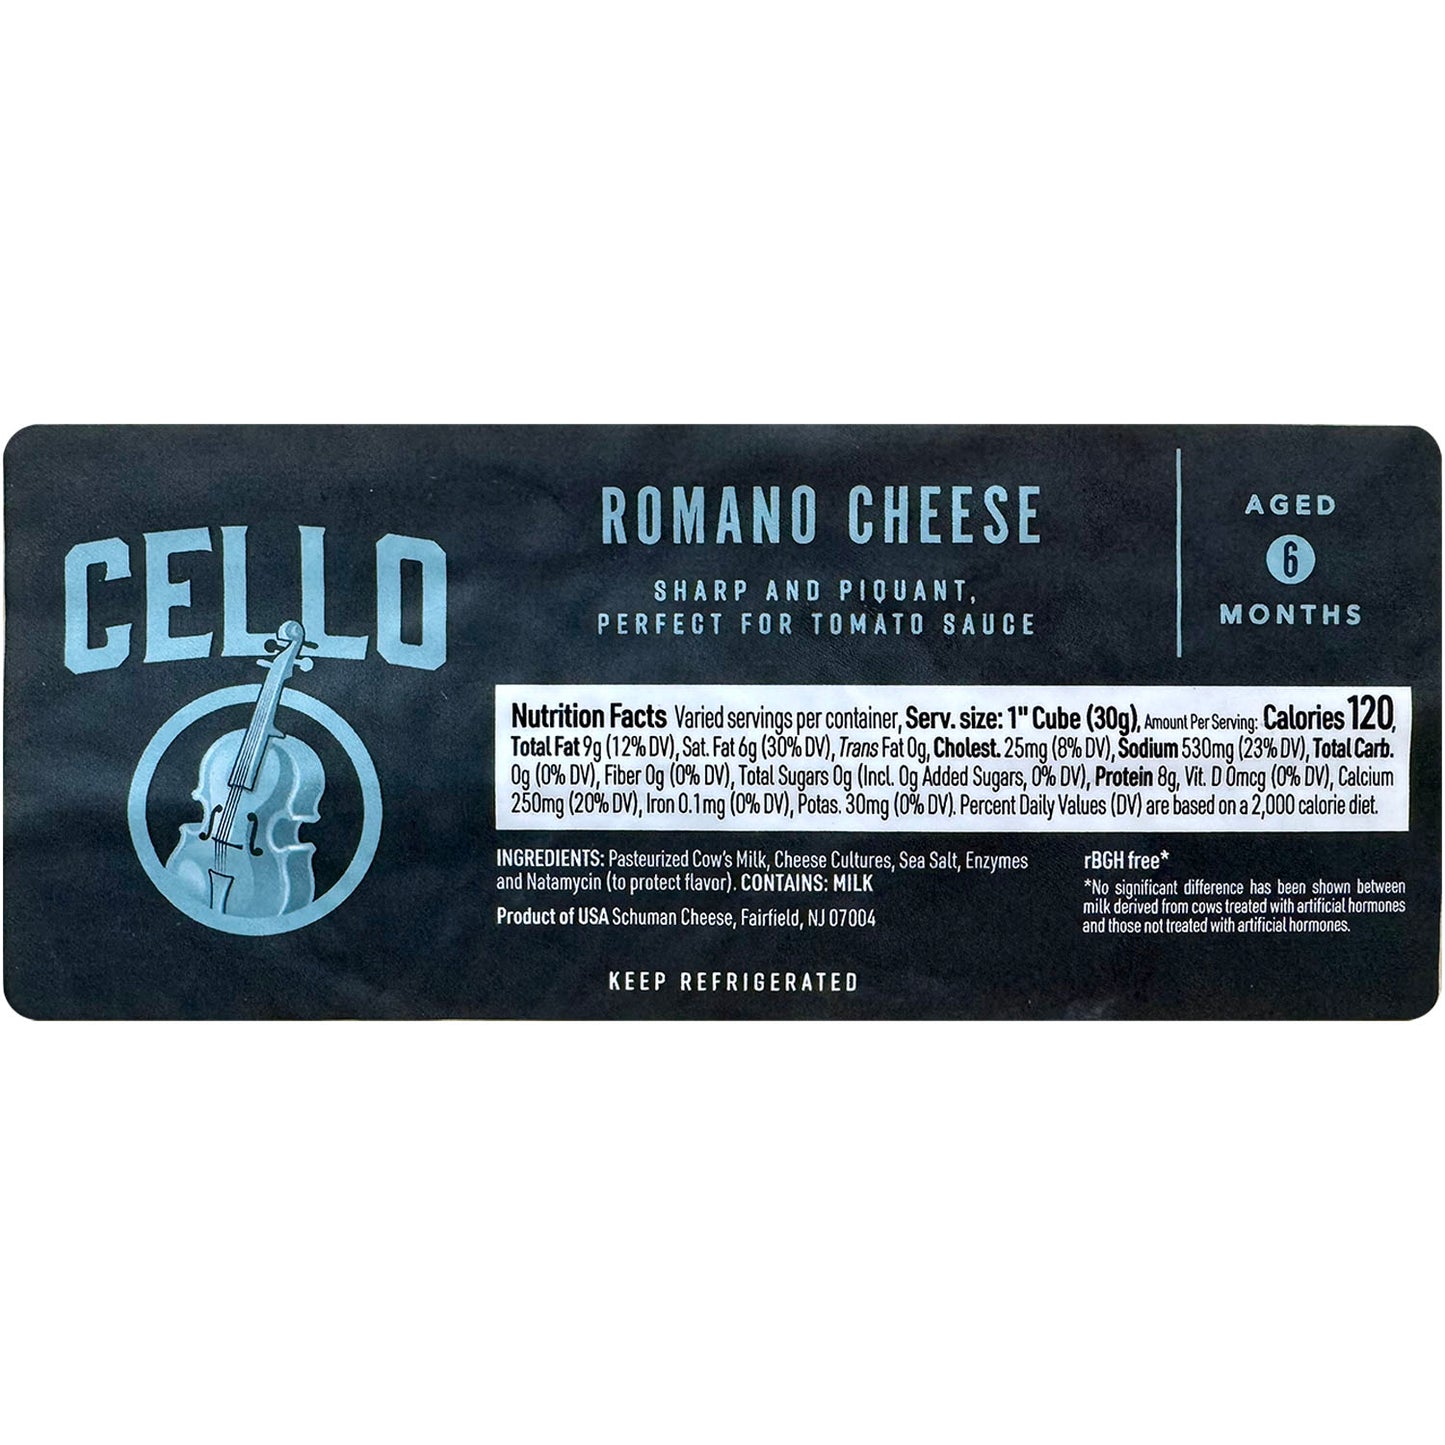 Cello Romano Cheese 8.16 Kg (Chilled)